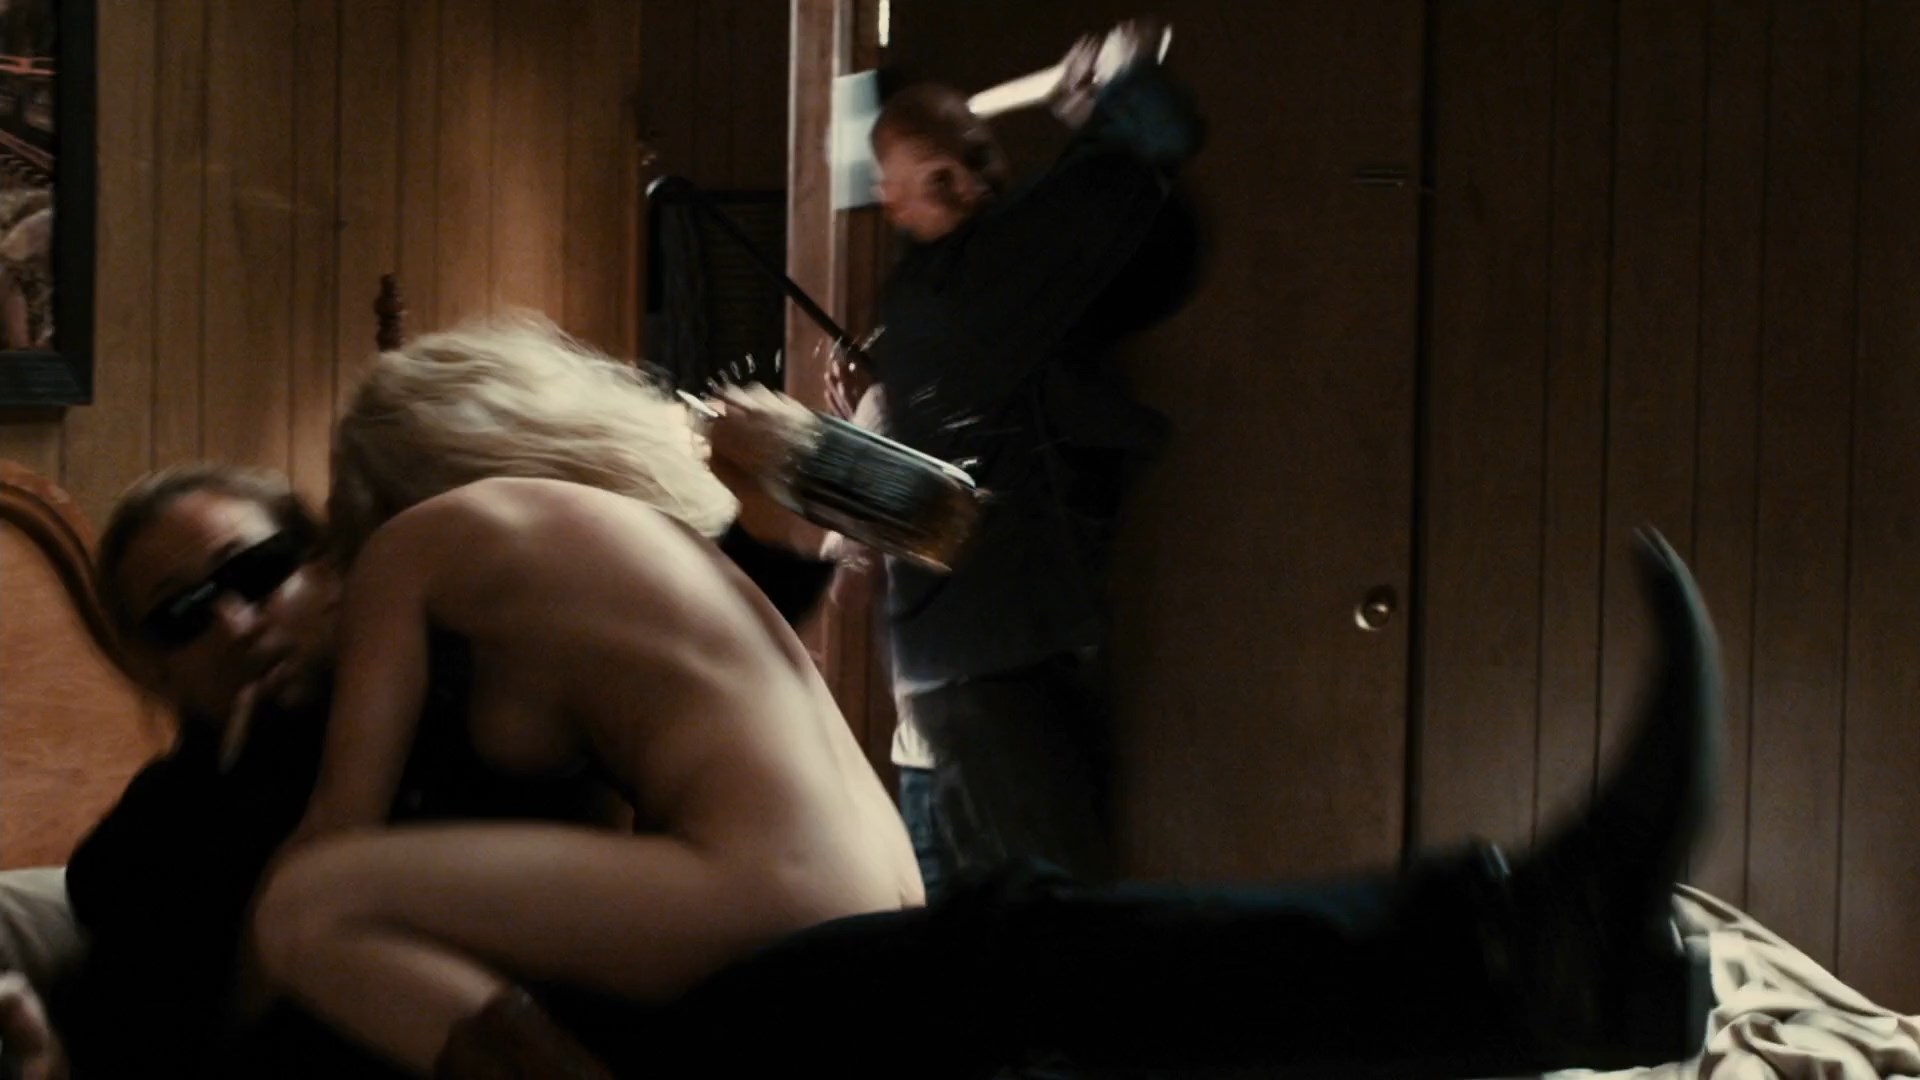 Quite long scene where fully naked Charlotte Ross bangs Nicolas Cage. 